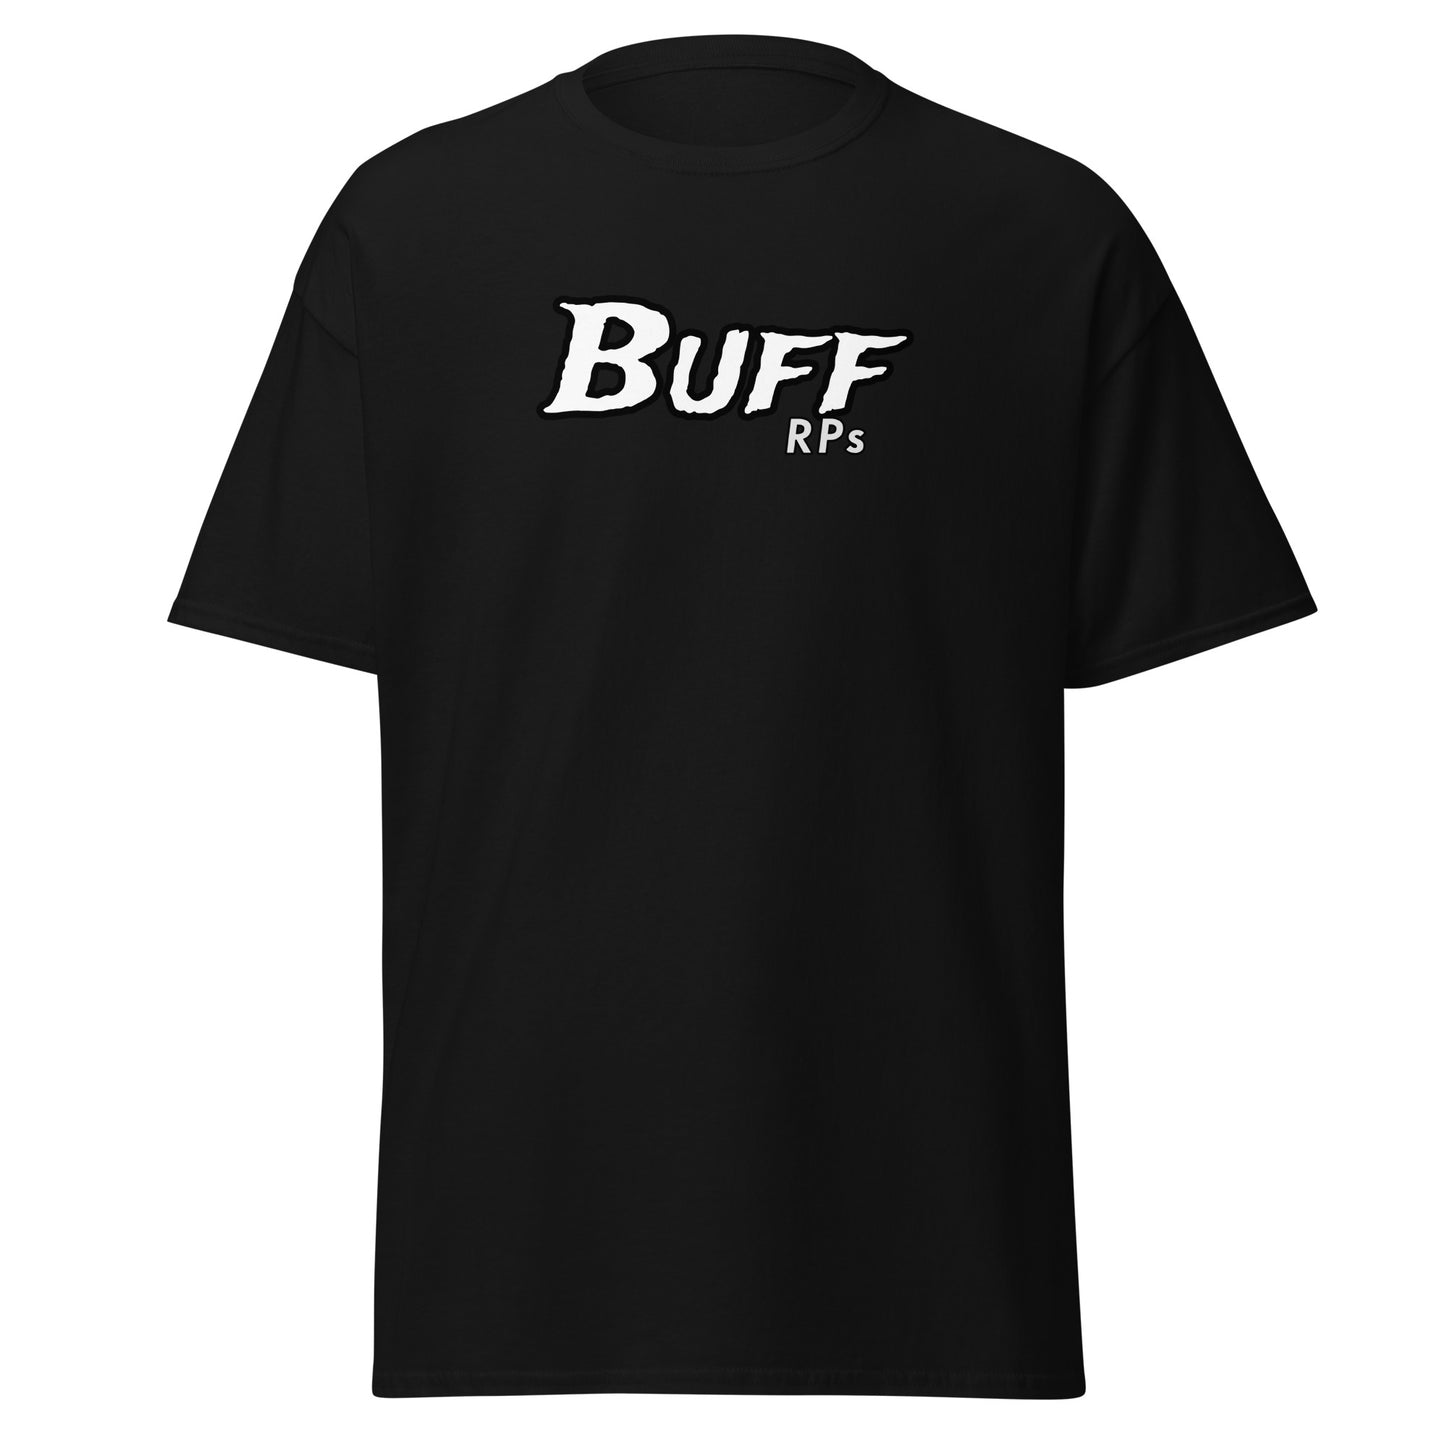 Buff RPs Men's Classic T-Shirt